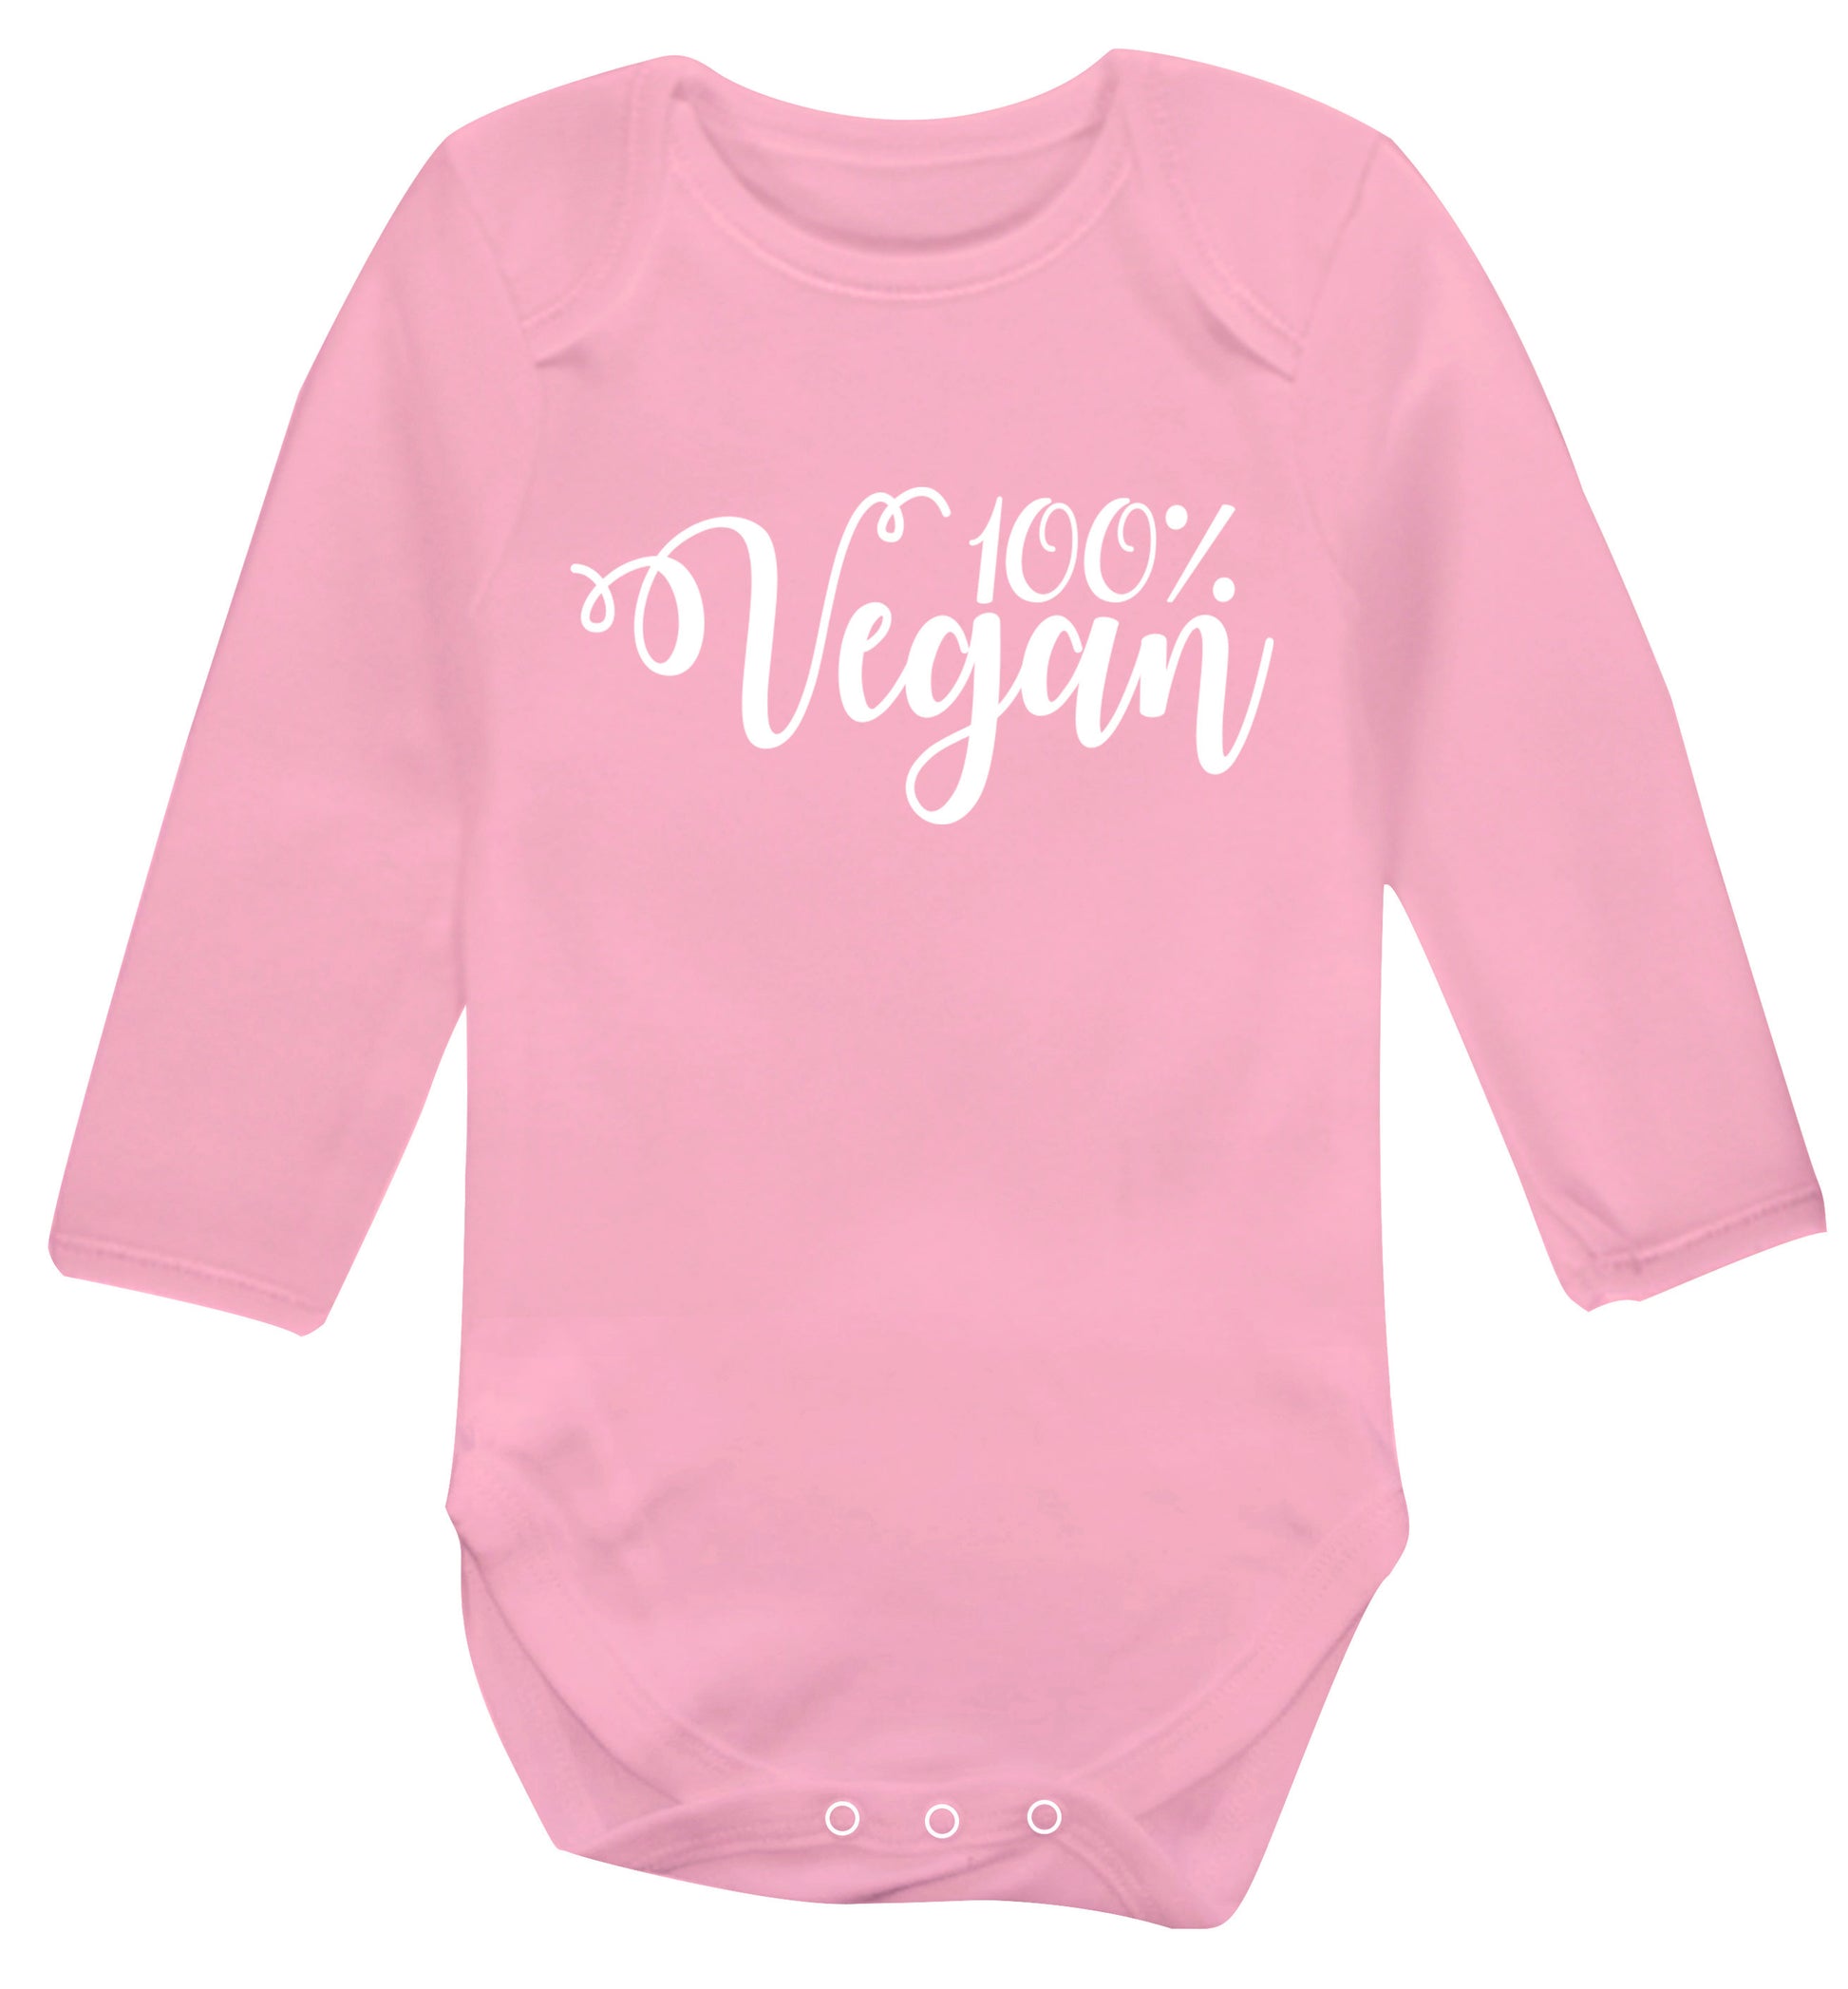 100% Vegan Baby Vest long sleeved pale pink 6-12 months